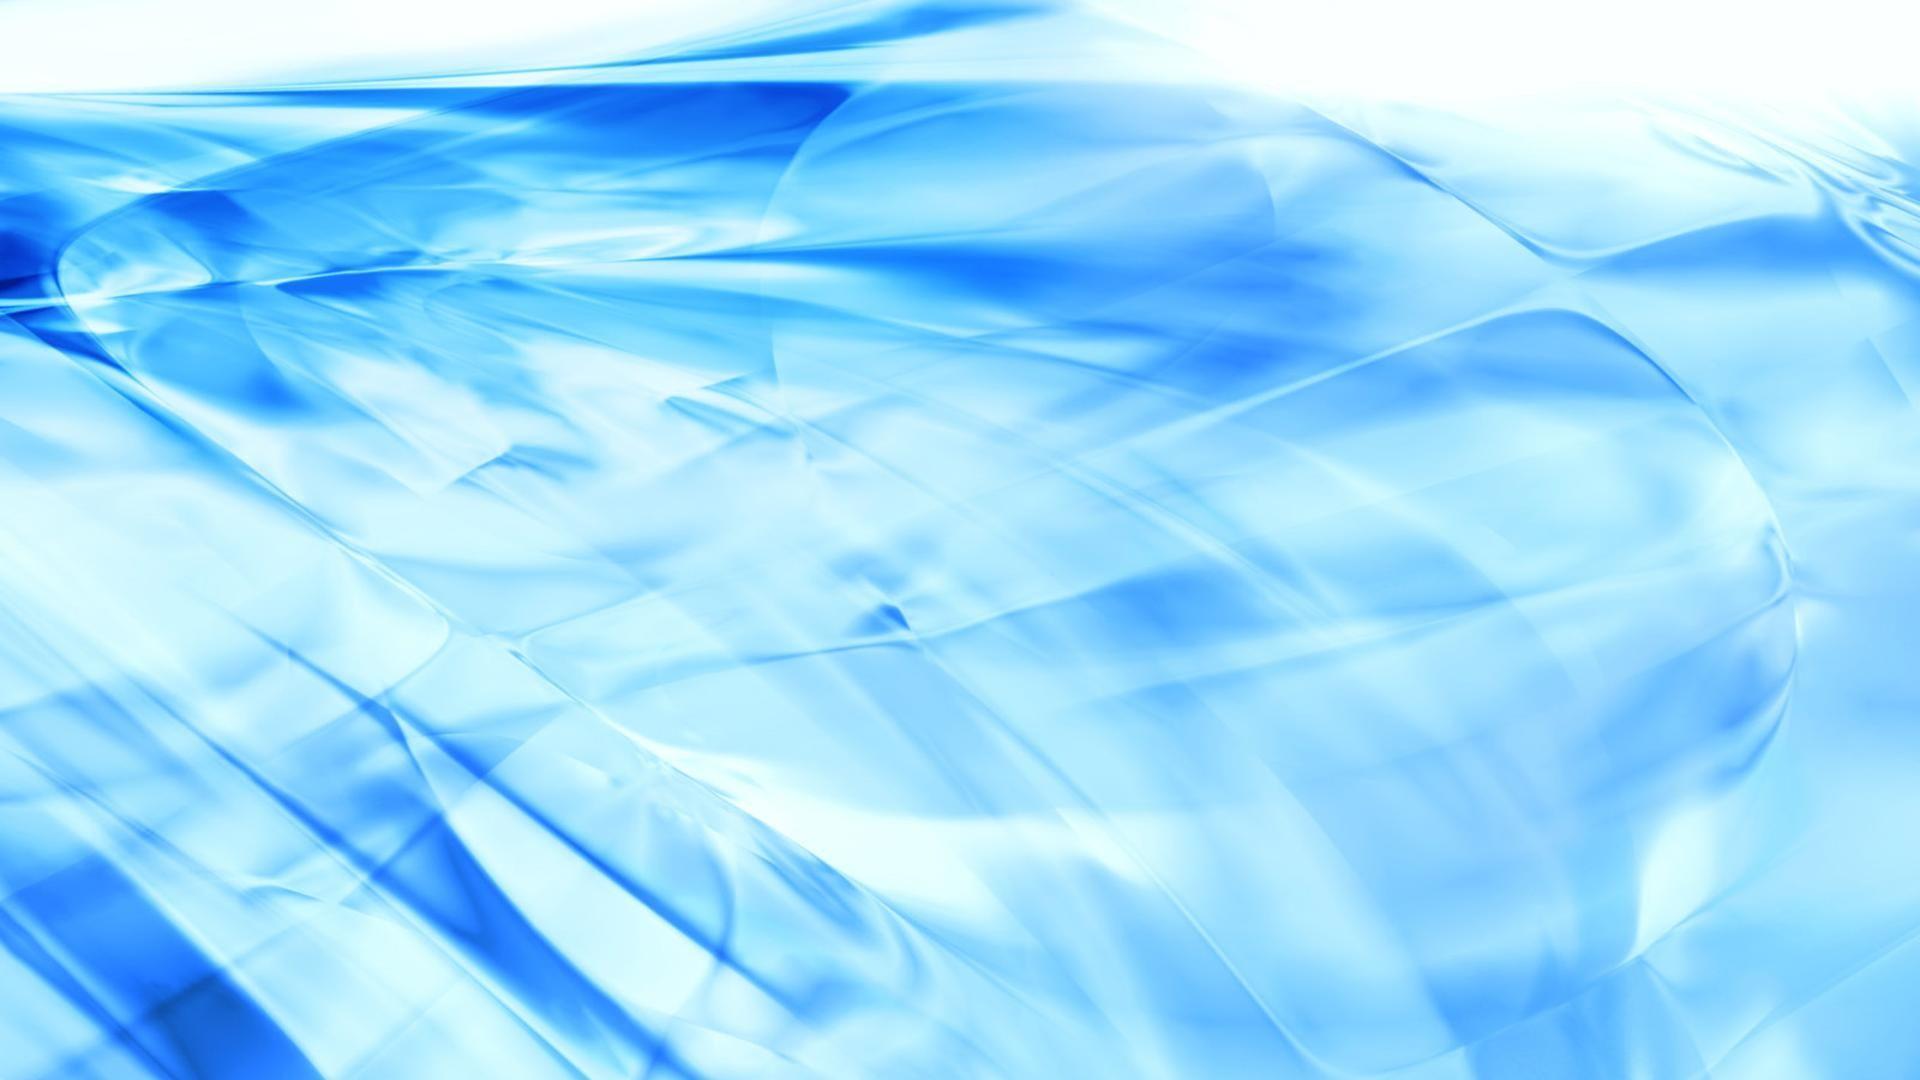 Abstract light blue waves blue free desktop backgrounds